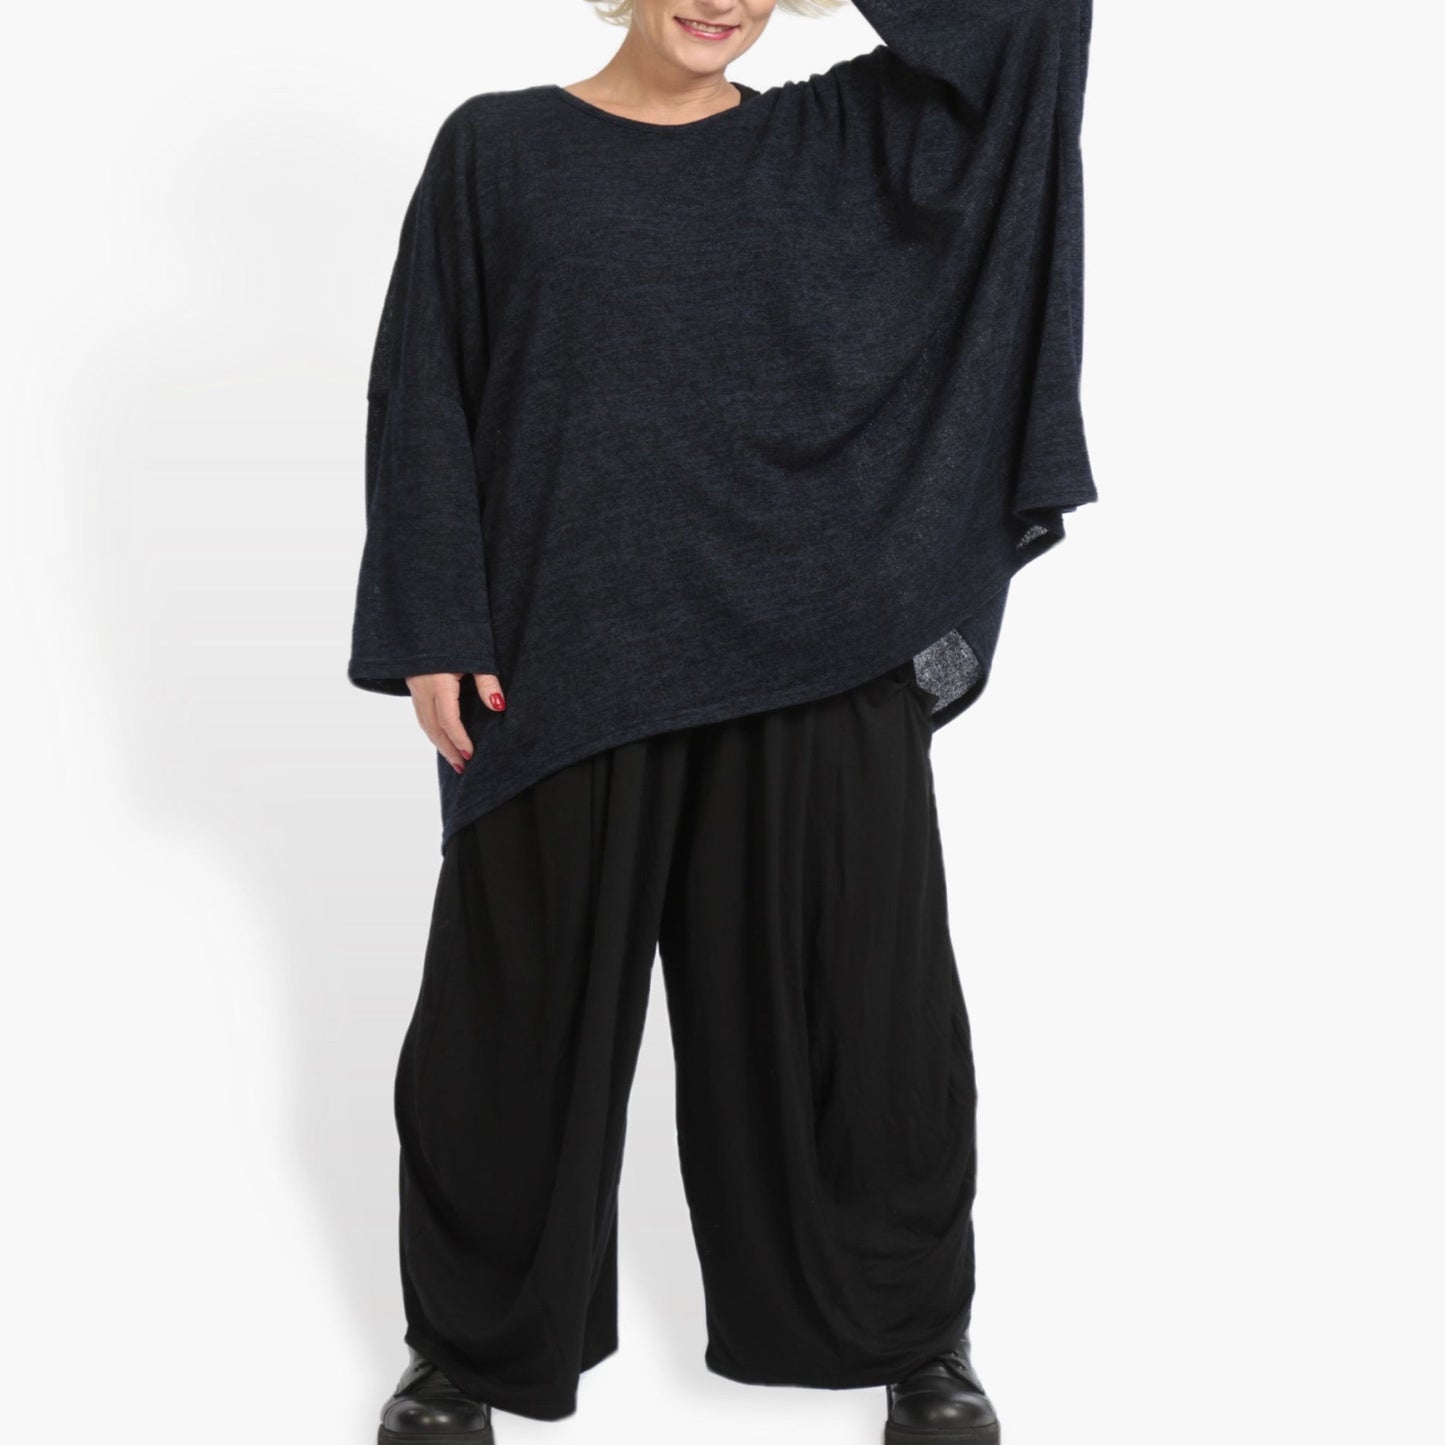 Everyday big shirt in a boxy shape made of light, fine knit quality, Yuki in dark blue